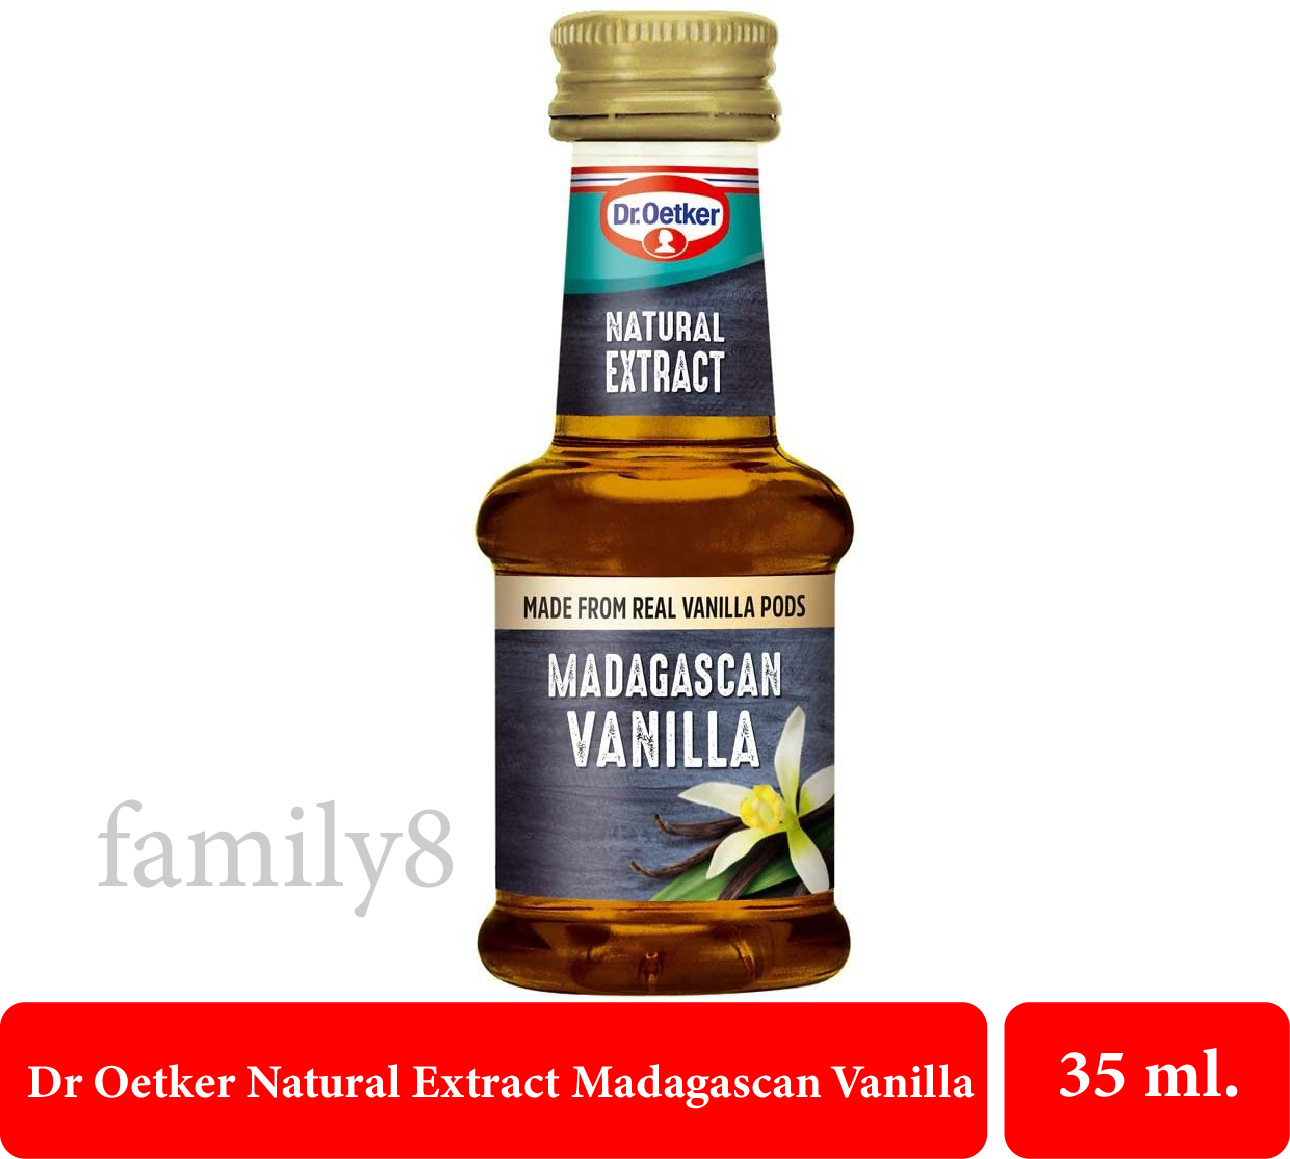 Dr. Oetker Madagascan Vanilla Natural Extract, 35 ml 😊ด๊อกเตอร์ โอเอดเคอร์ กลิ่นวานิลลา 35 มล. สินค้าพรีเมี่ยม จากอังกฤษ😊🔥 ราคาพิเศษสุดๆ เพียง145 บาท 🔥